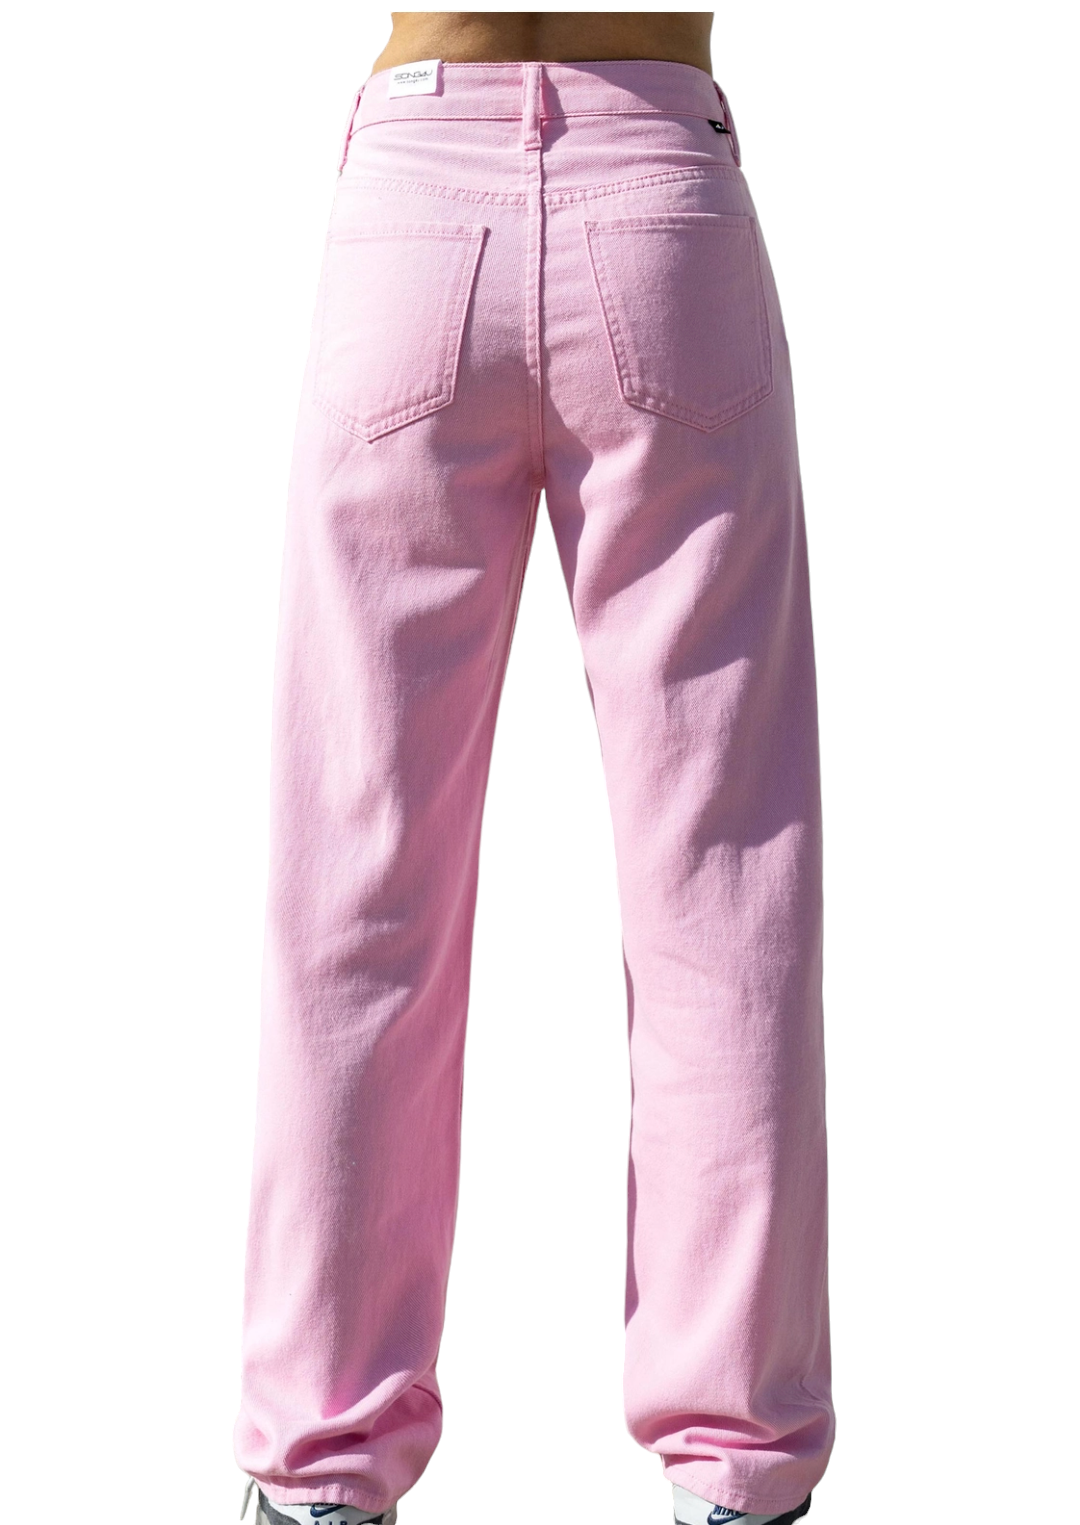 Pastel pink jeans